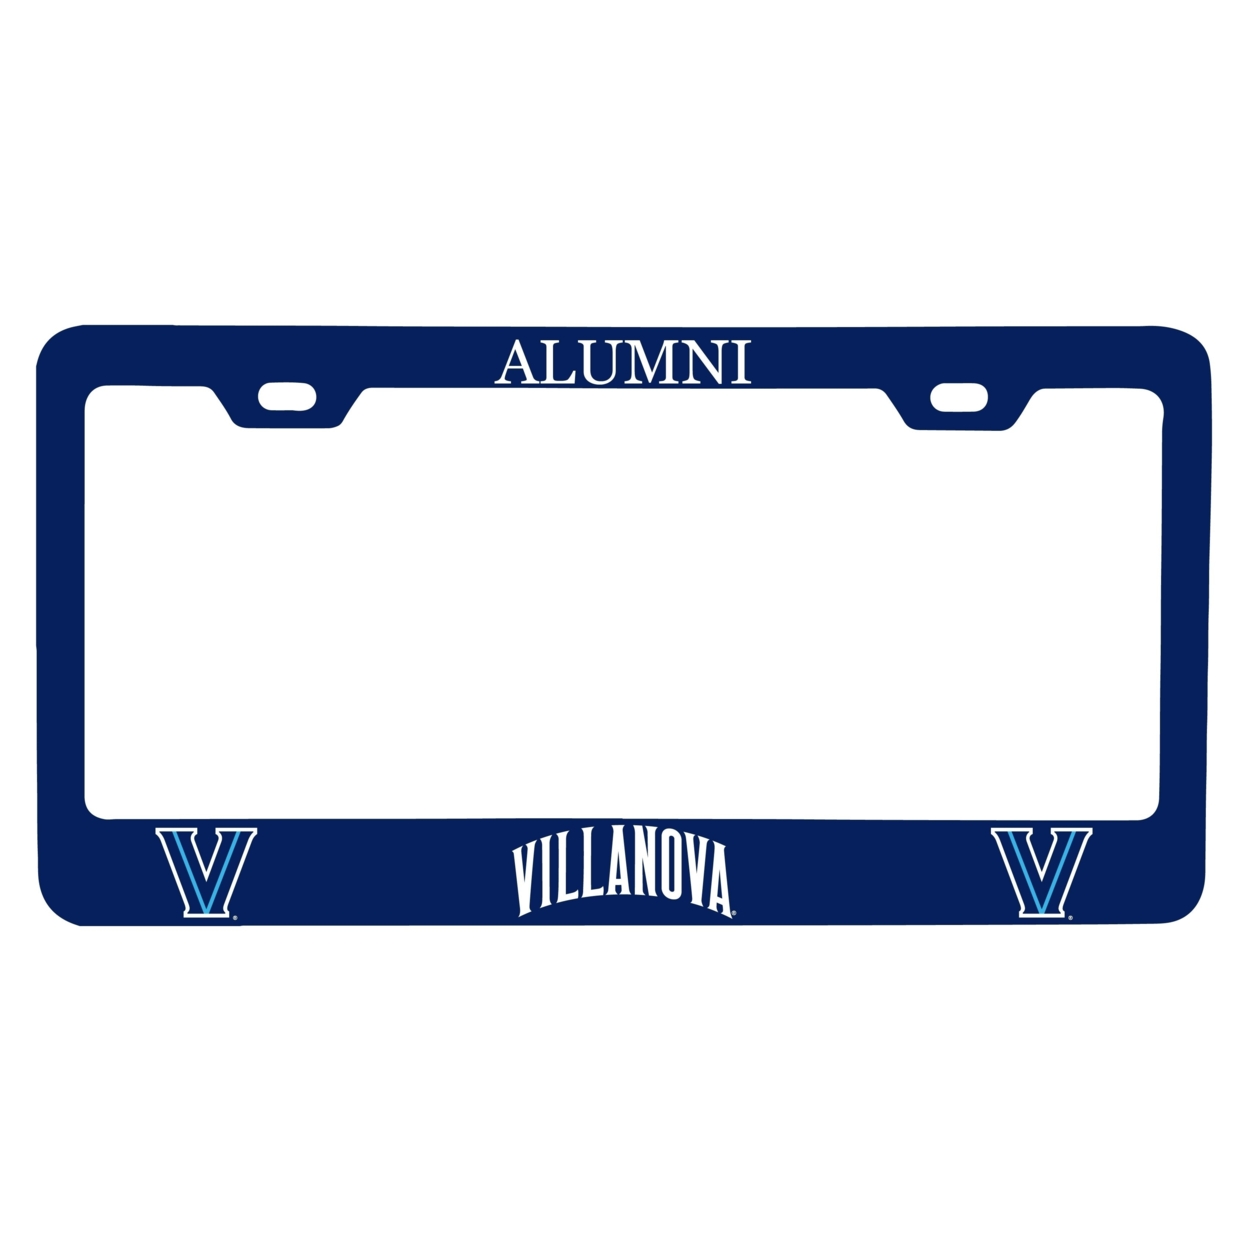 Villanova Wildcats Alumni License Plate Frame